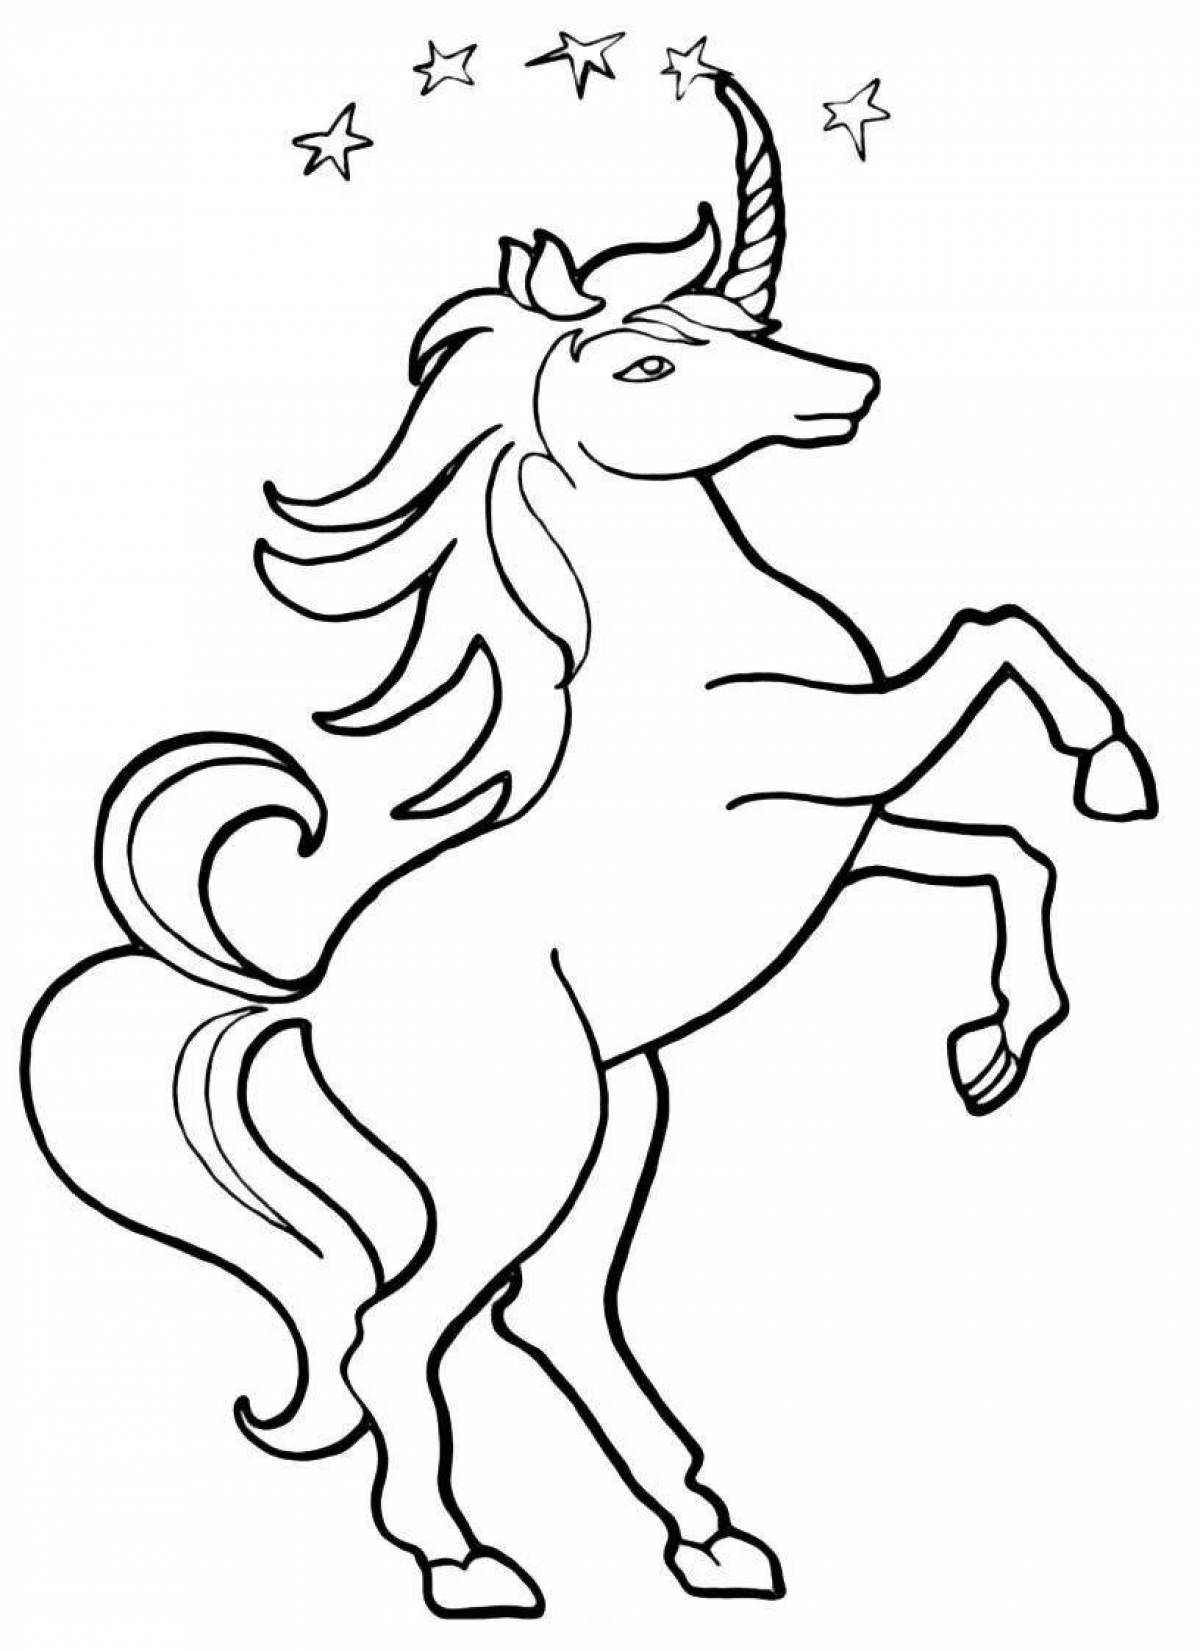 Magic unicorns coloring page